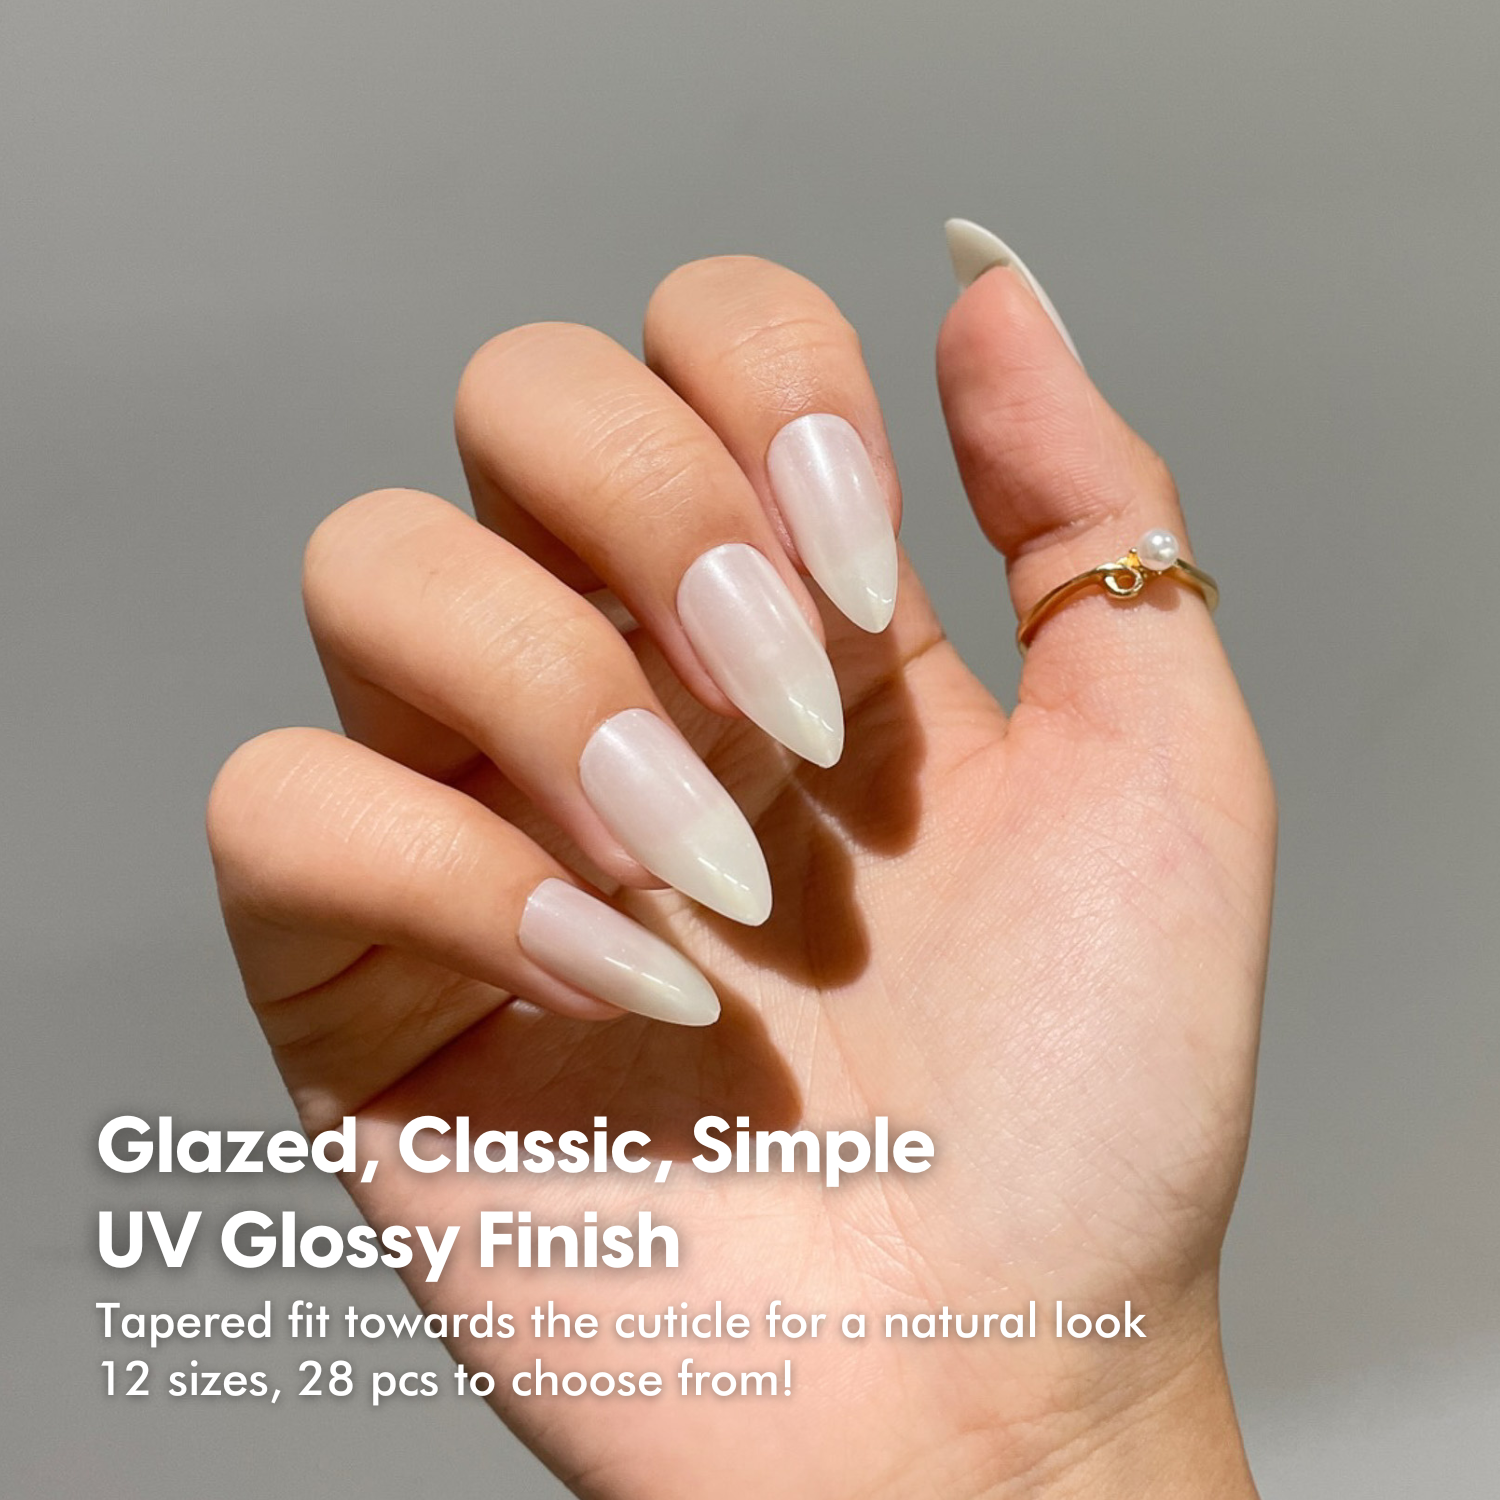 GLAZED Buffi Press On Nails